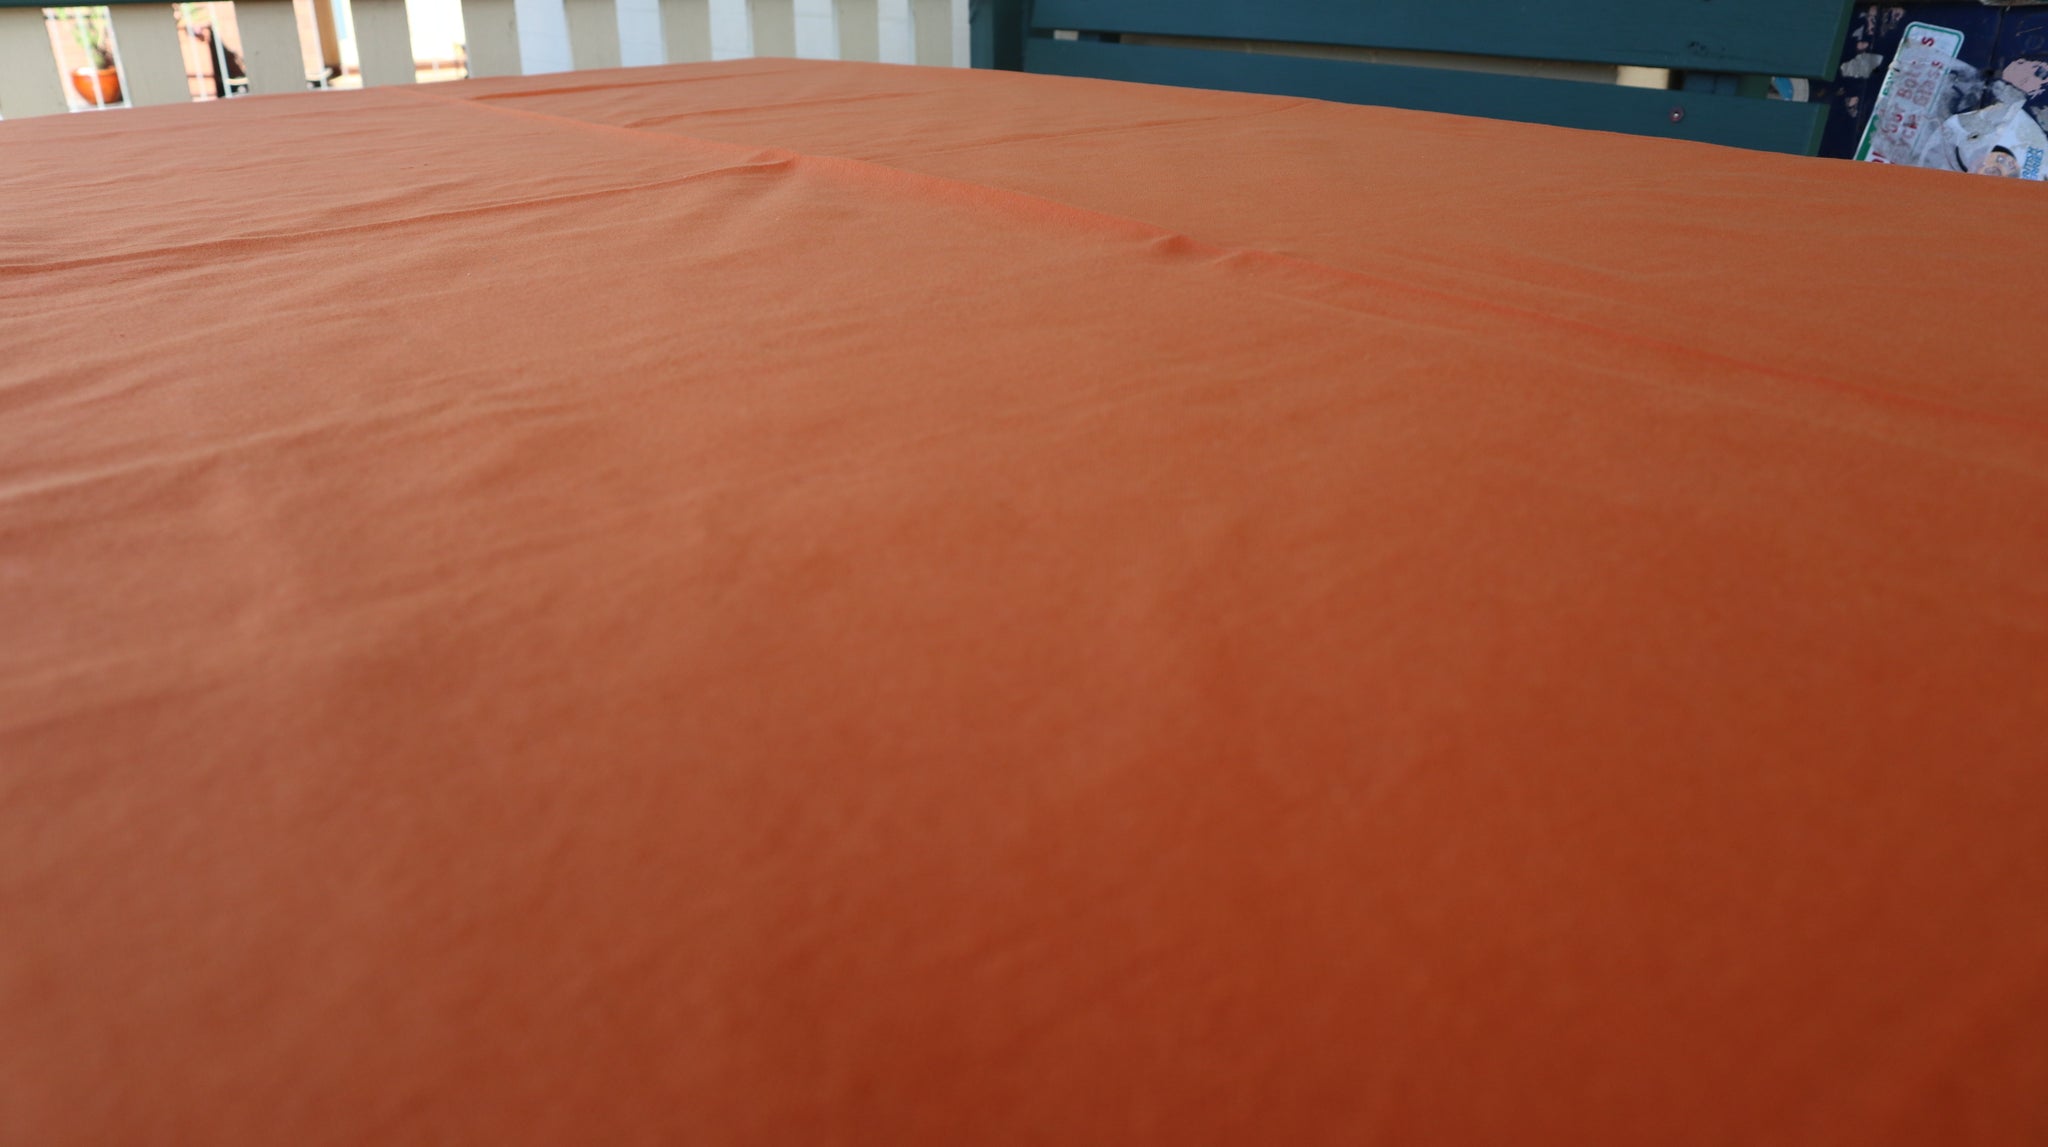 Fair trade ethical handwoven table cloth in a tiger orange colouring